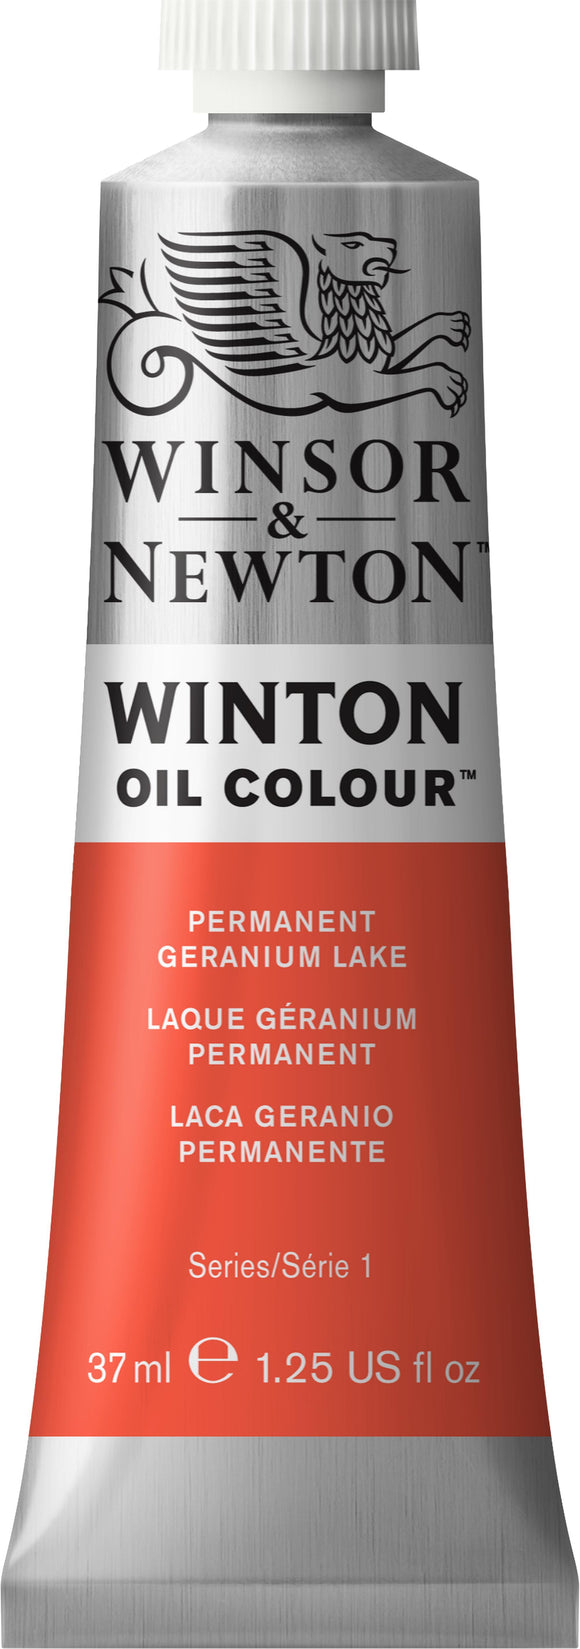 Winsor & Newton Winton Oil Colour Permanent Geranium Lake 37Ml